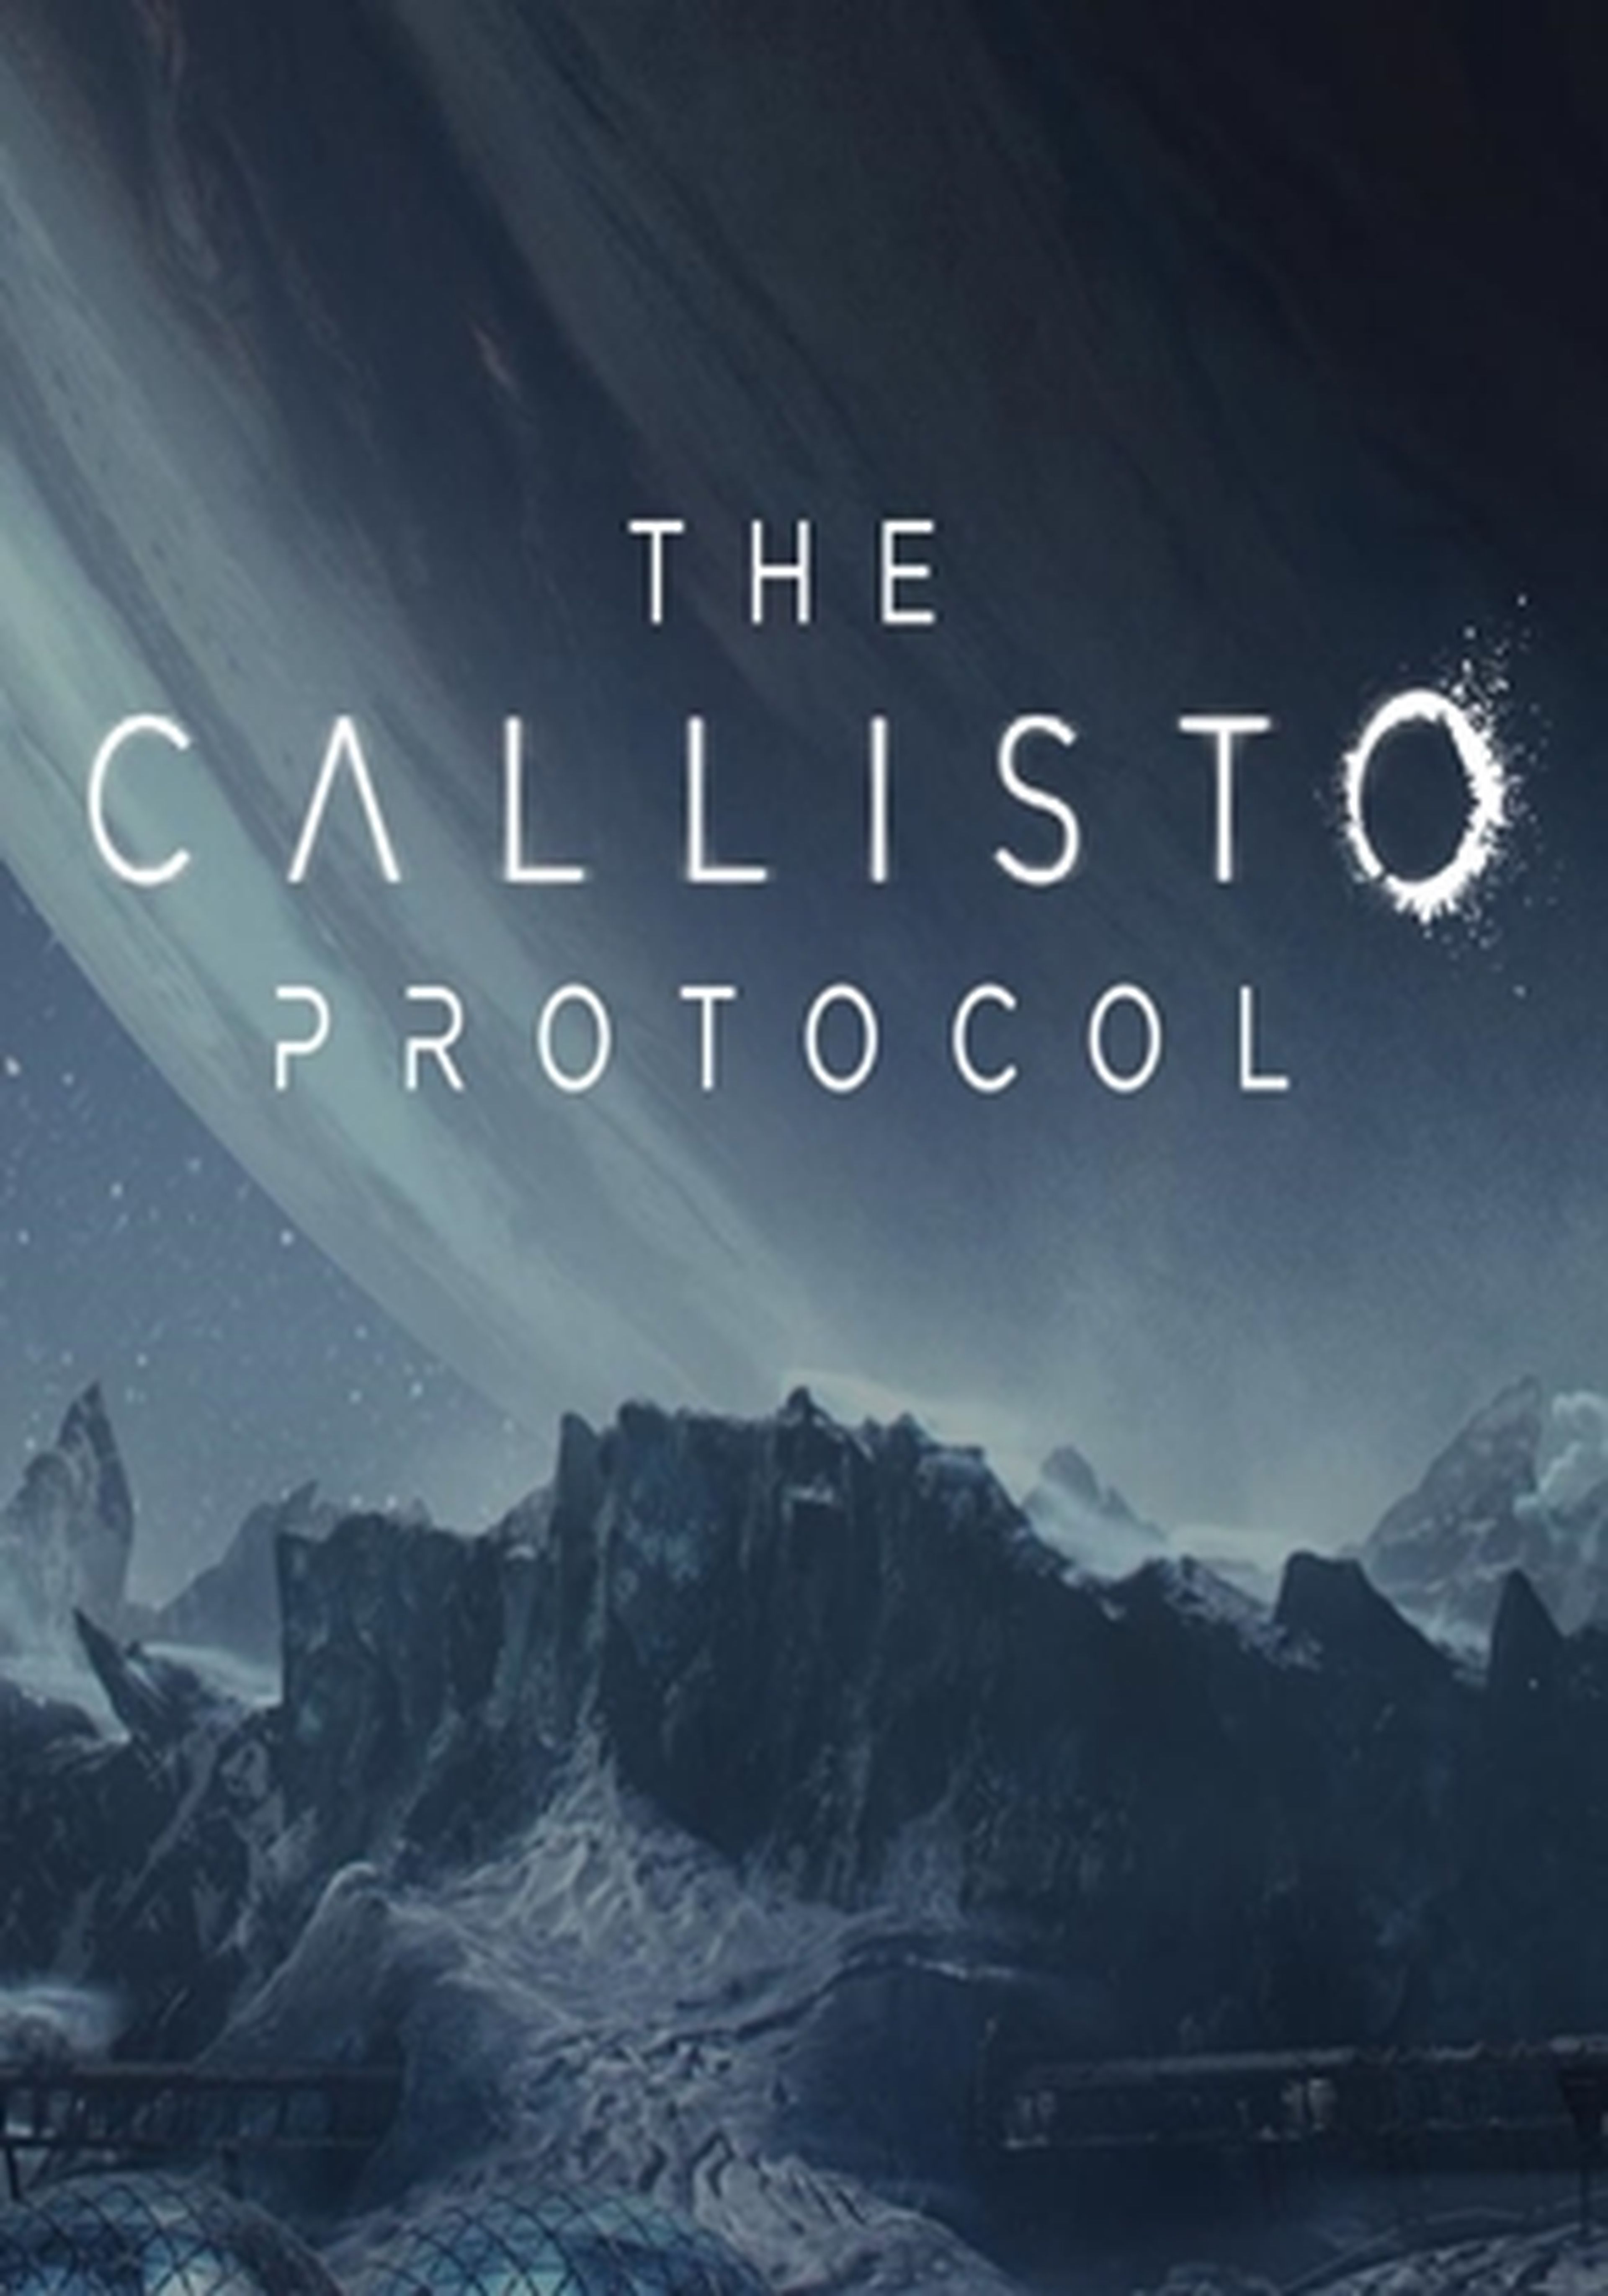 The Callisto Protocol cartel